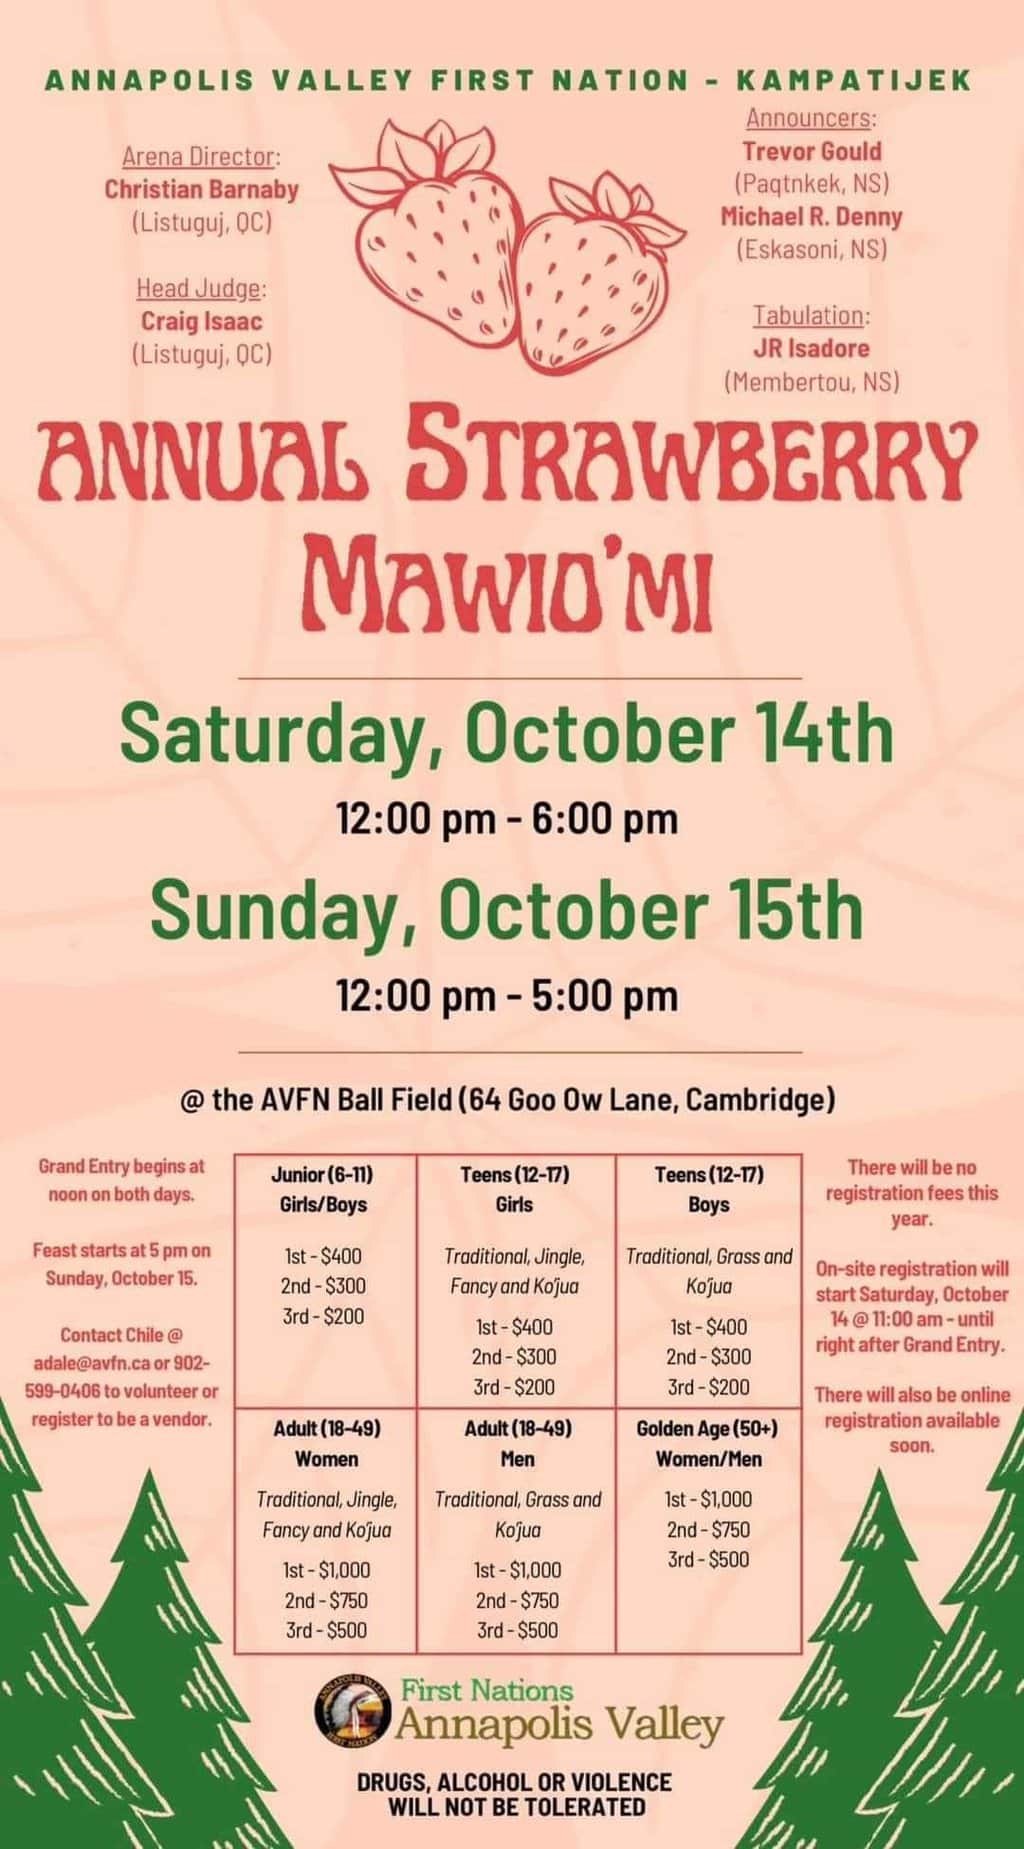 Annual Strawberry Mawo'Mi 2023